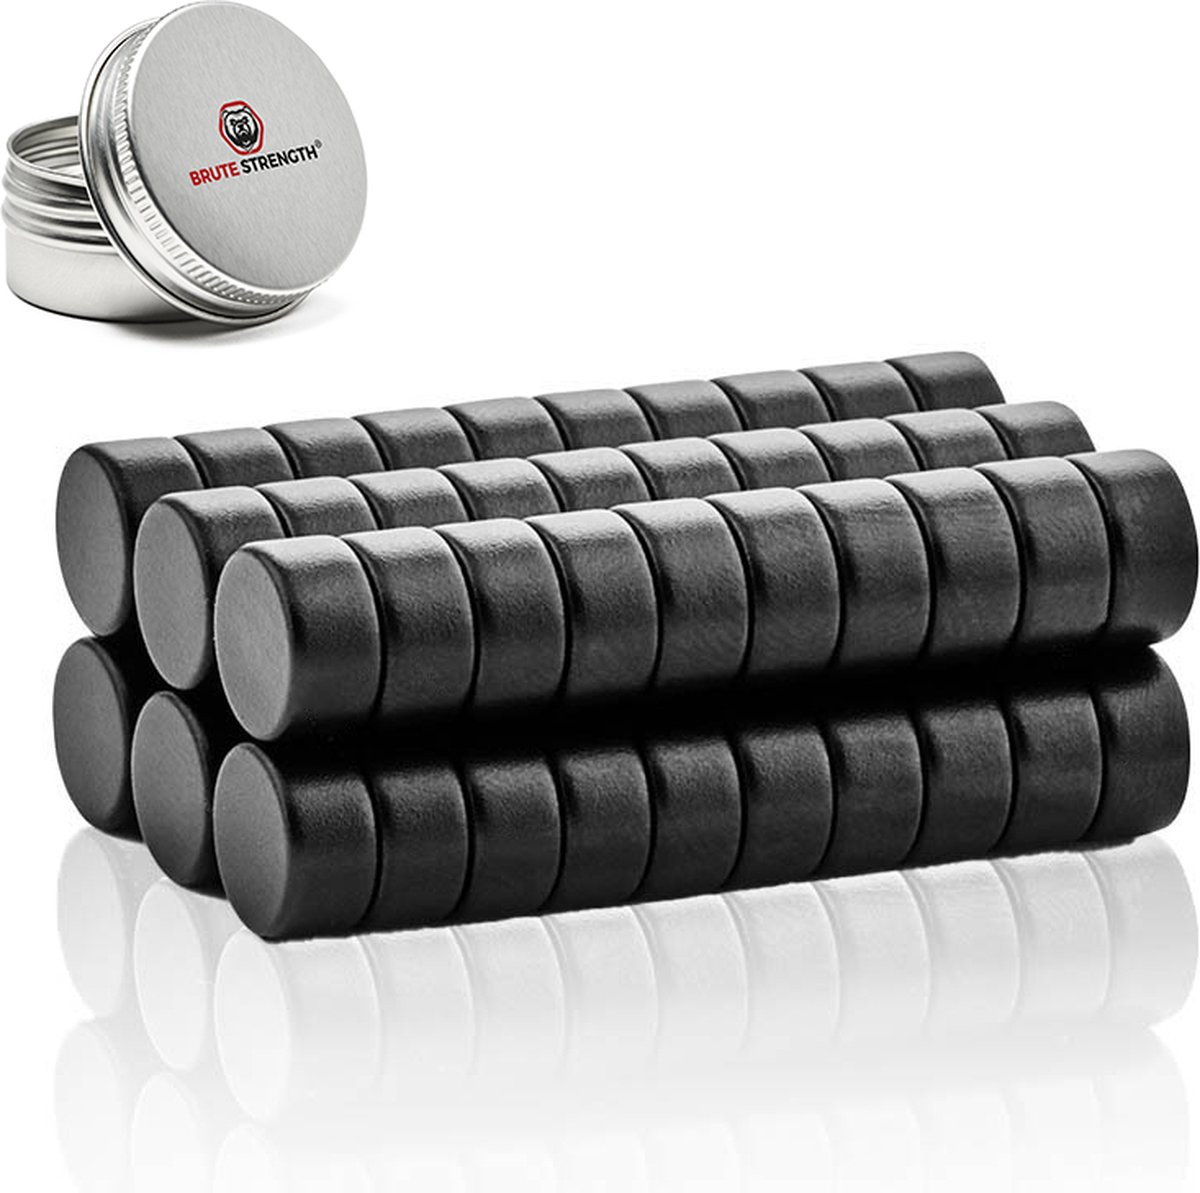 Brute Strength - Super sterke magneten - Rond - 10 x 5 mm - 60 Stuks | Zwart - Neodymium magneet sterk - Voor koelkast - whiteboard - Brute Strength